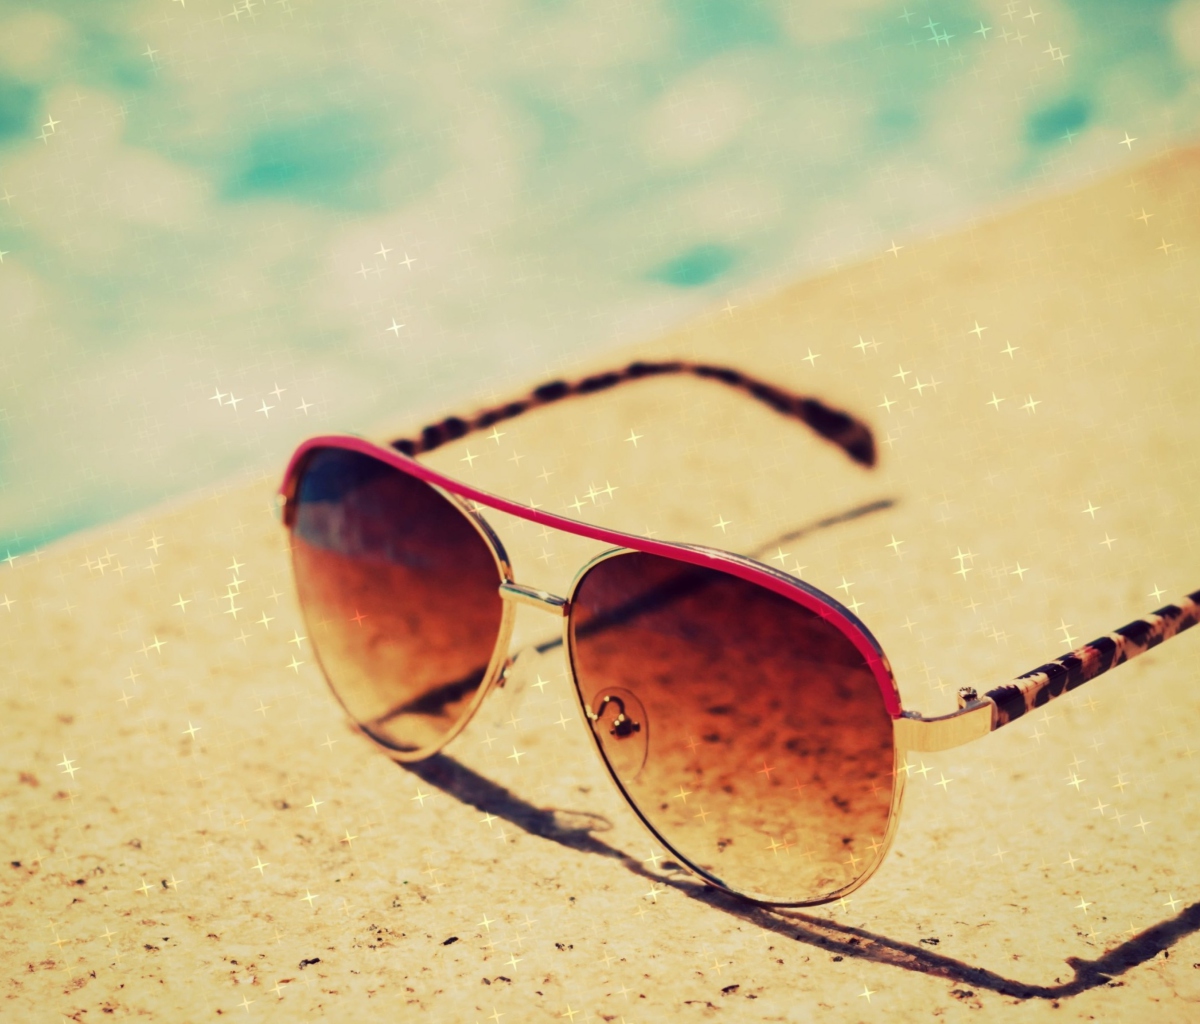 Sunglasses By Pool wallpaper 1200x1024